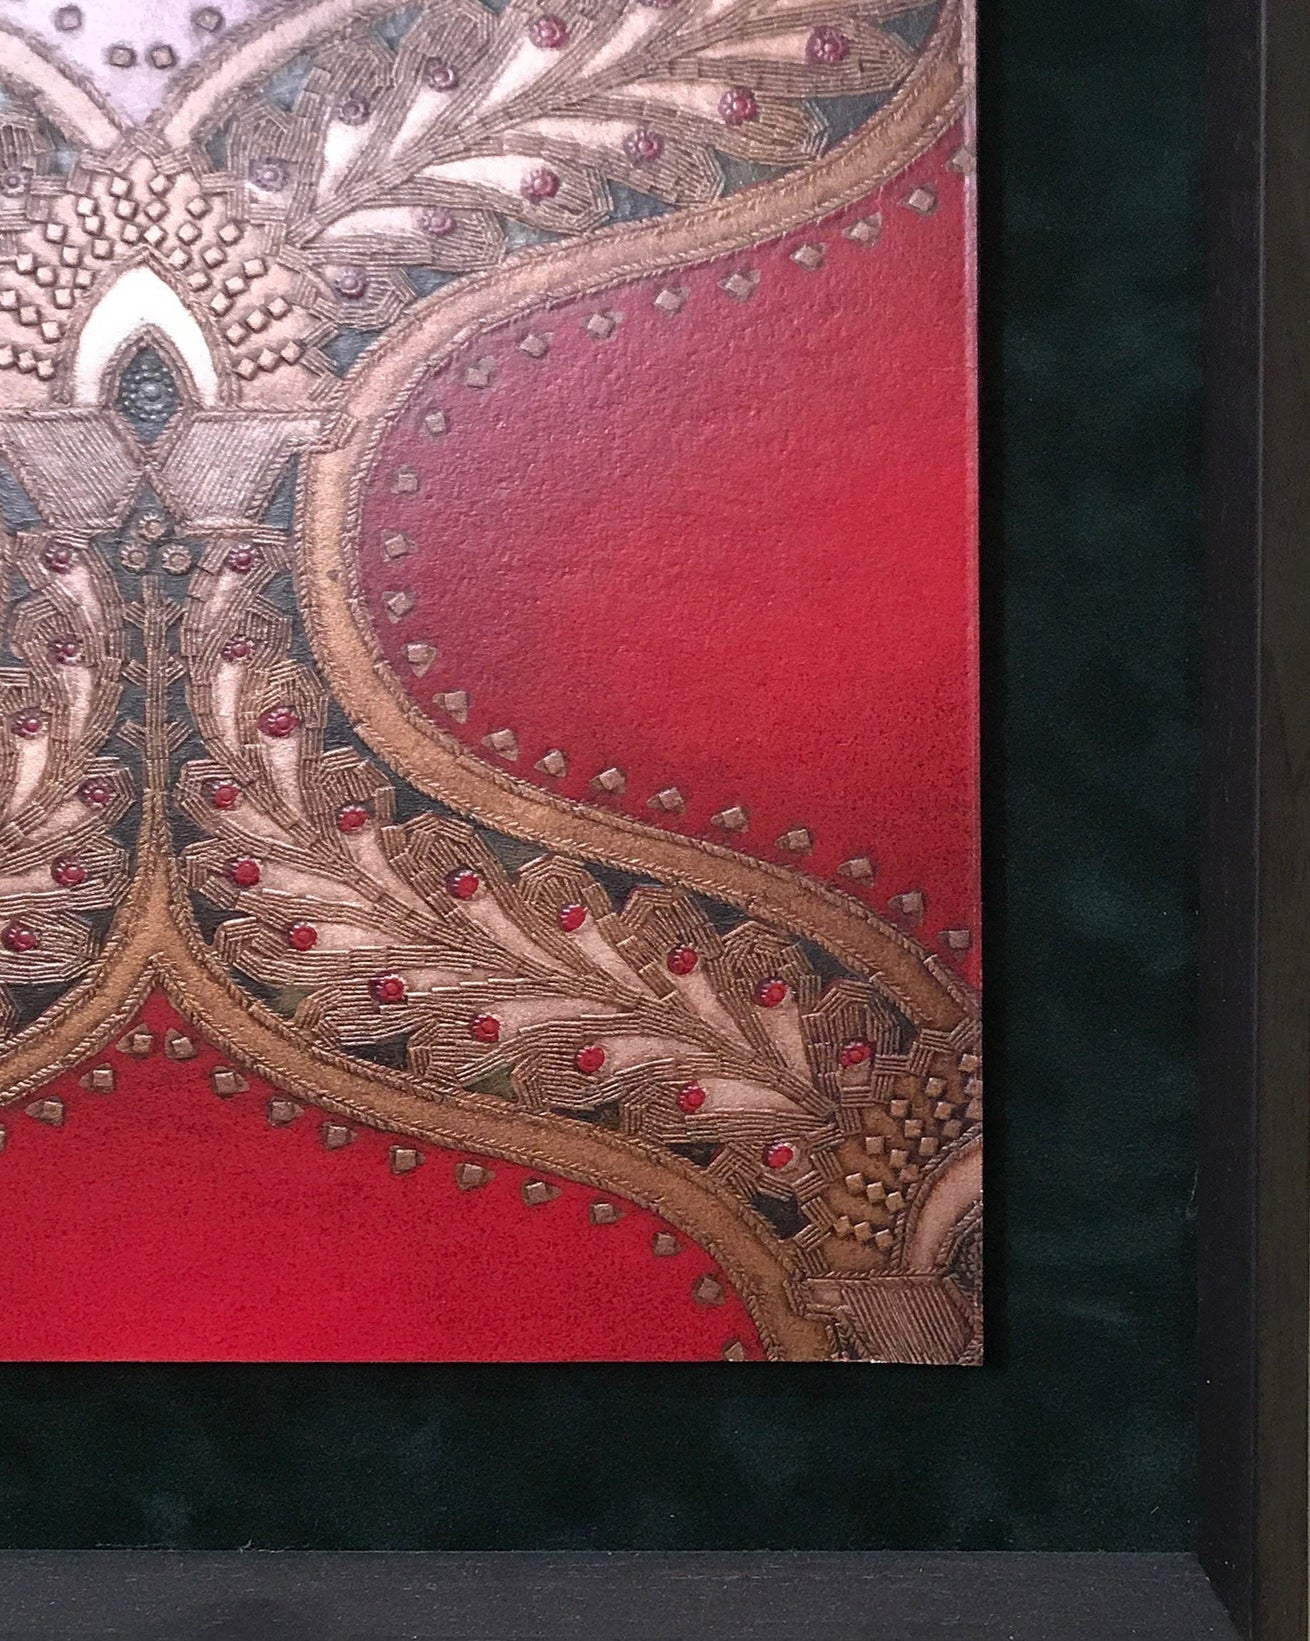 Hand-Stamped Piscine “Leather” Sidewall - Framed Antique Wallpaper Art